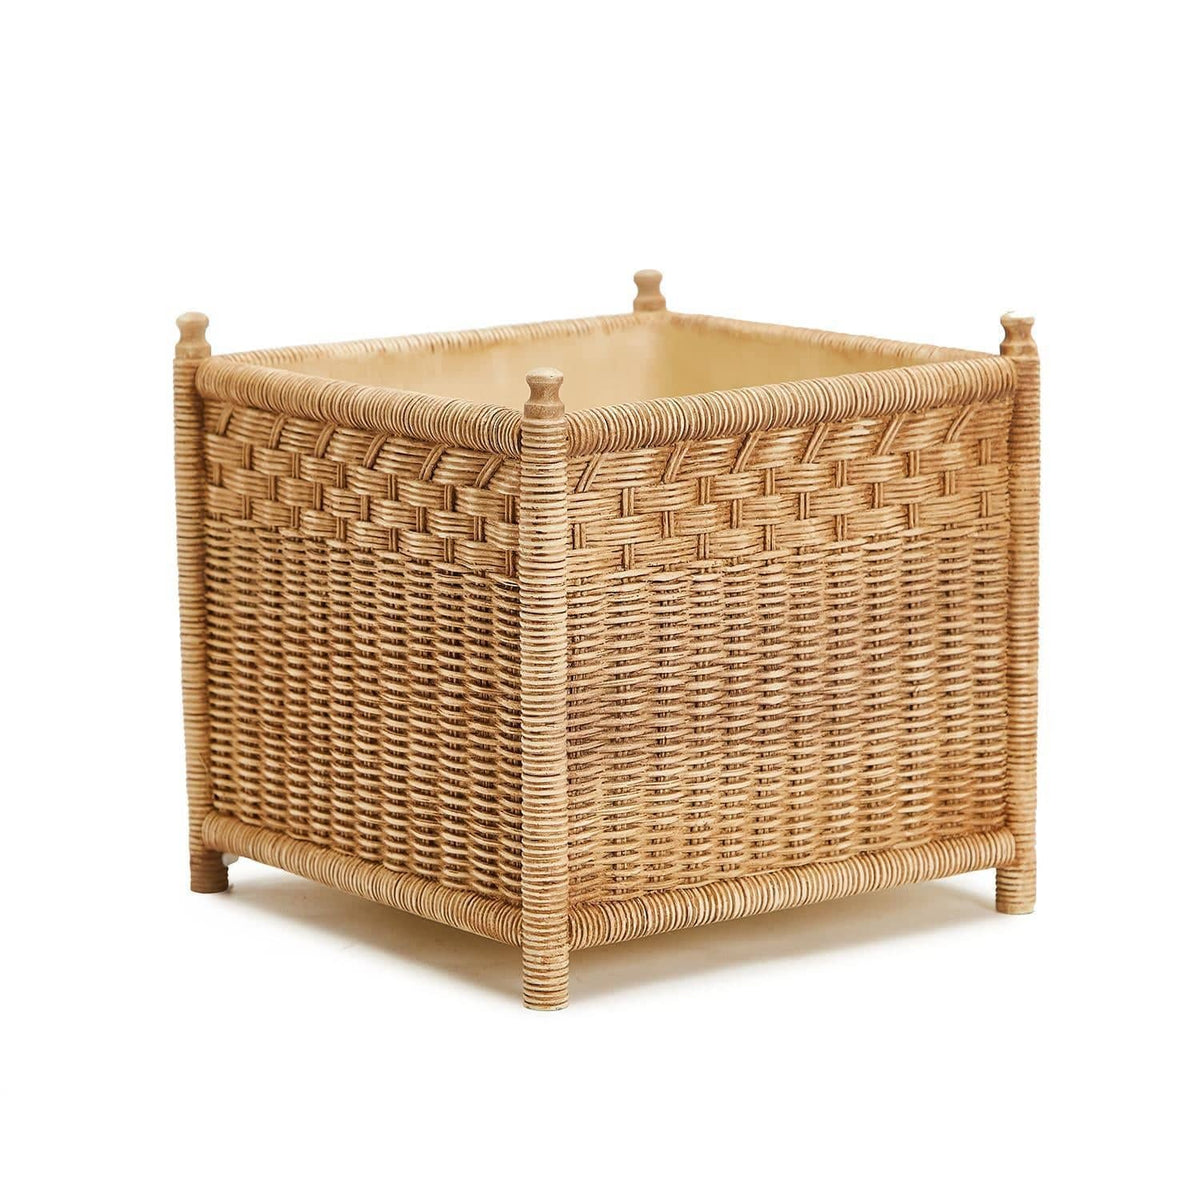 Basket Weave Pattern Square Cachepot - Resin - The Preppy Bunny